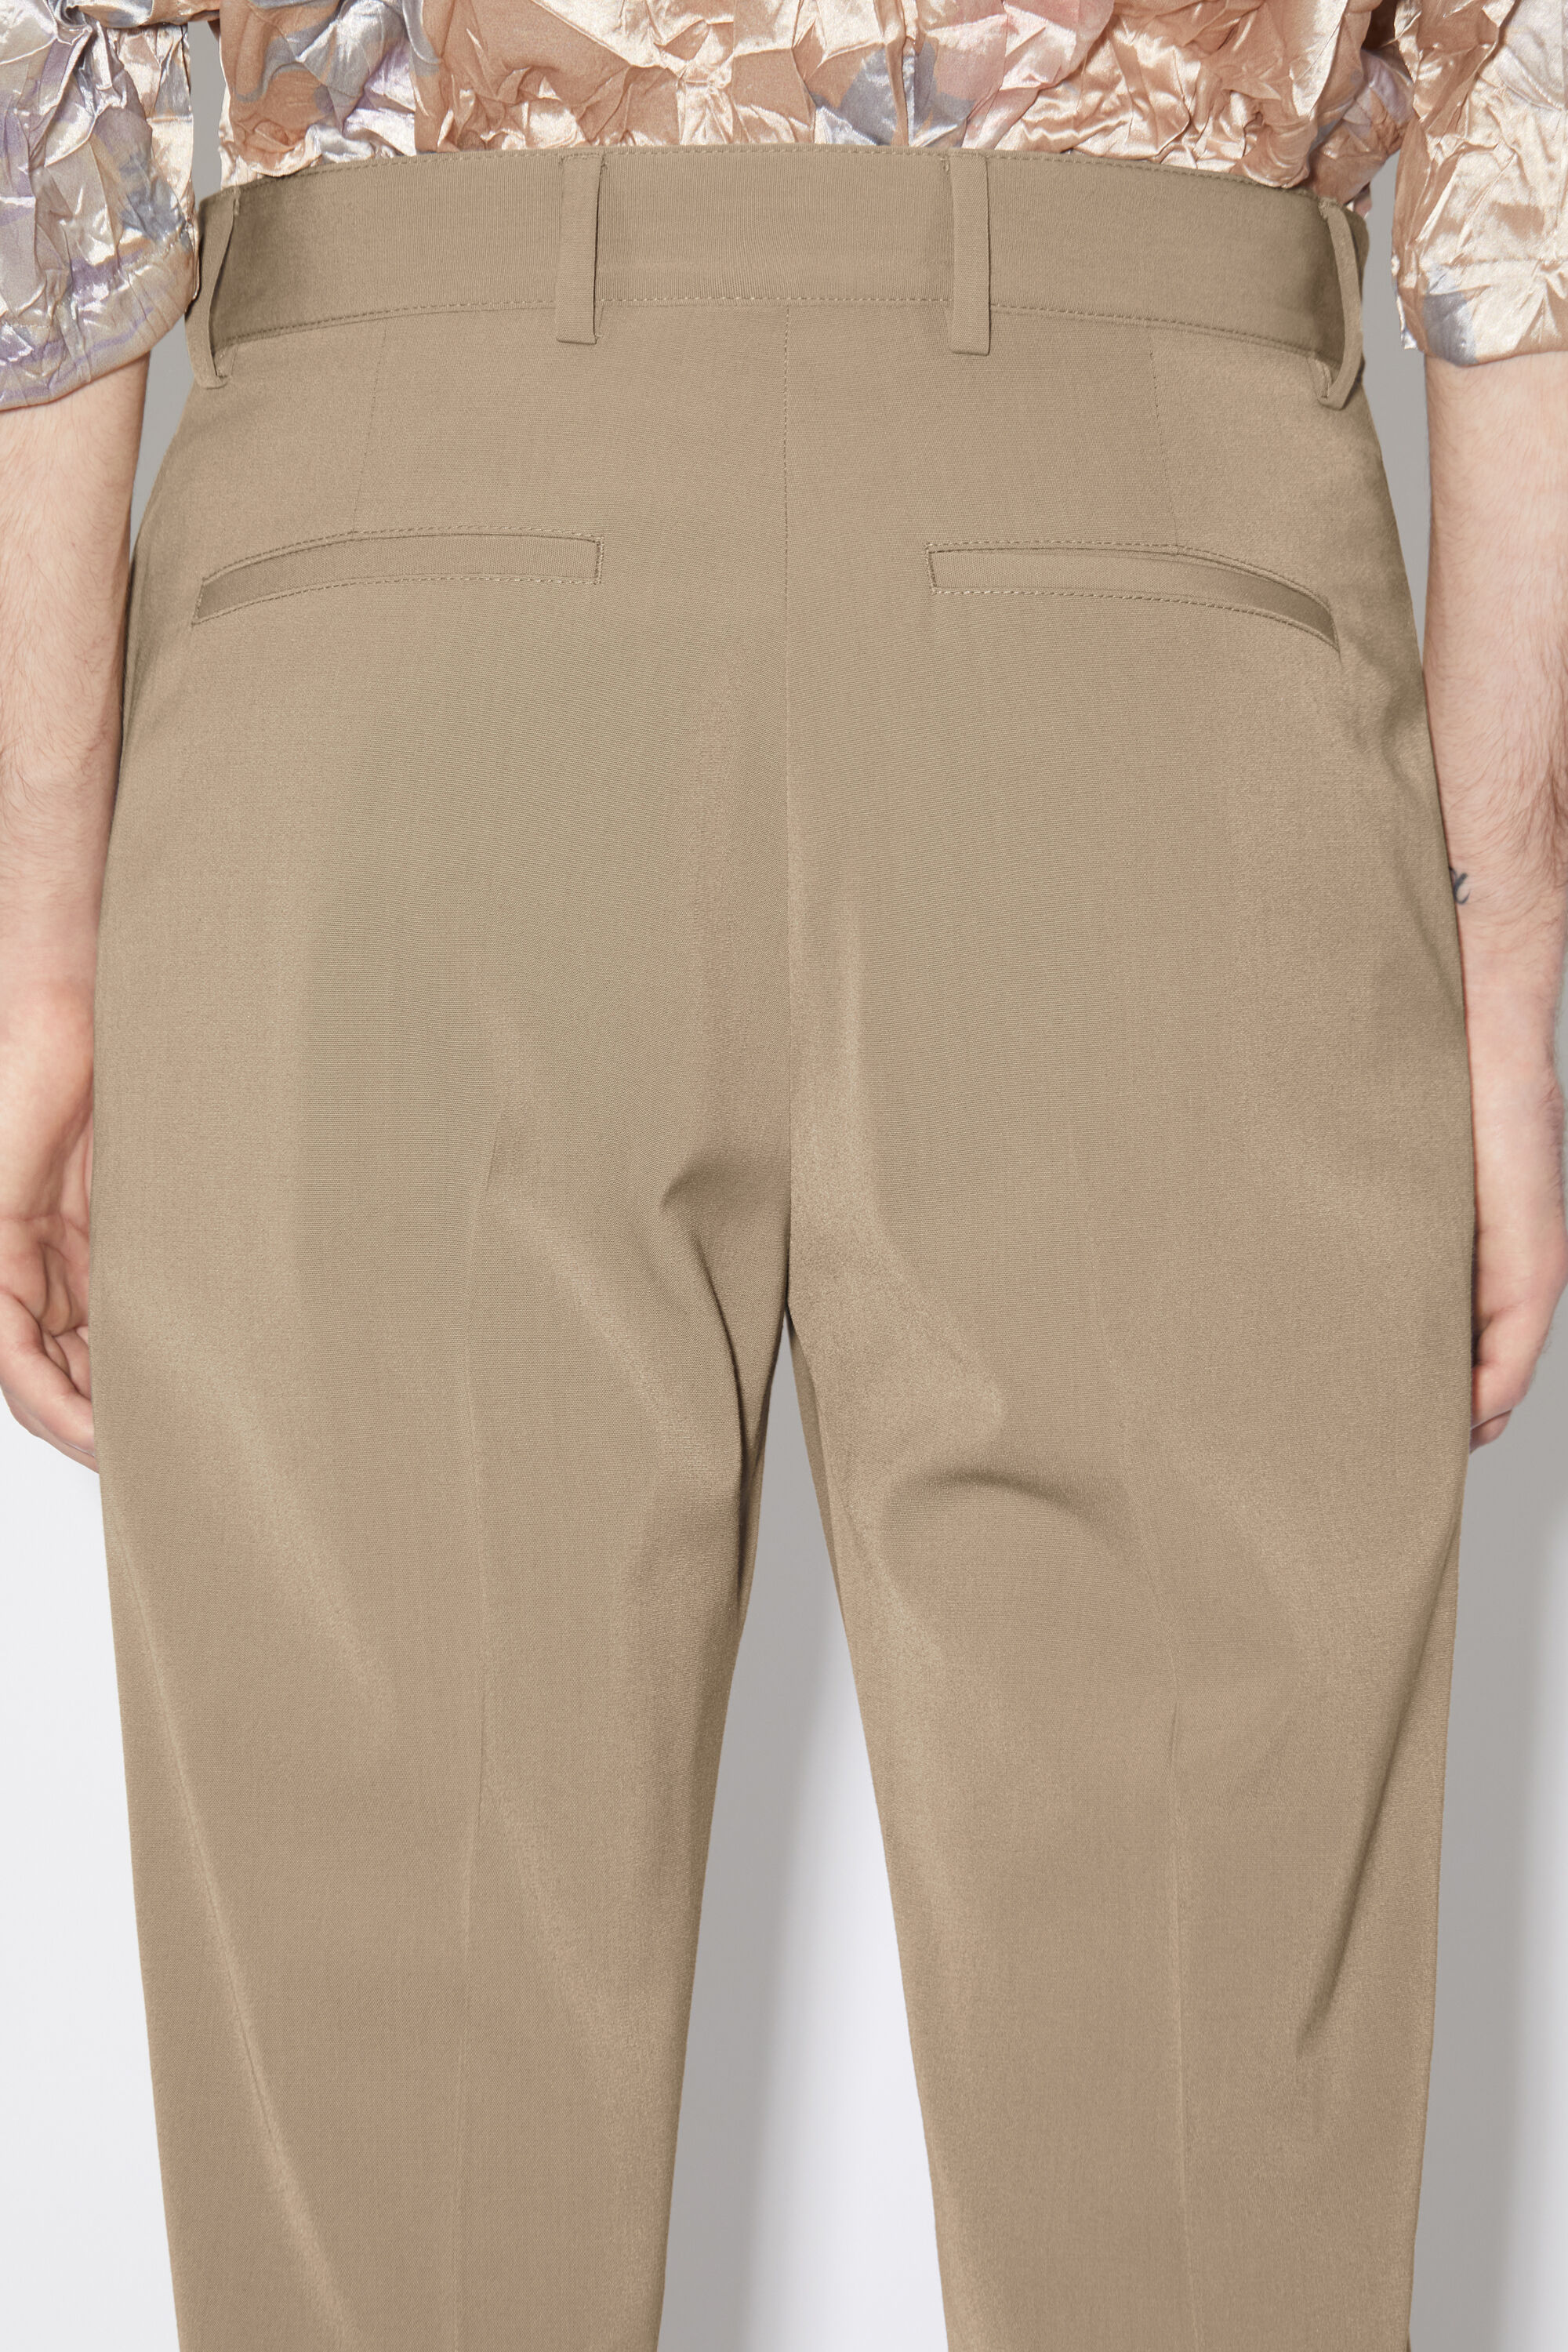 Buy Grey Trousers & Pants for Men by ARROW Online | Ajio.com